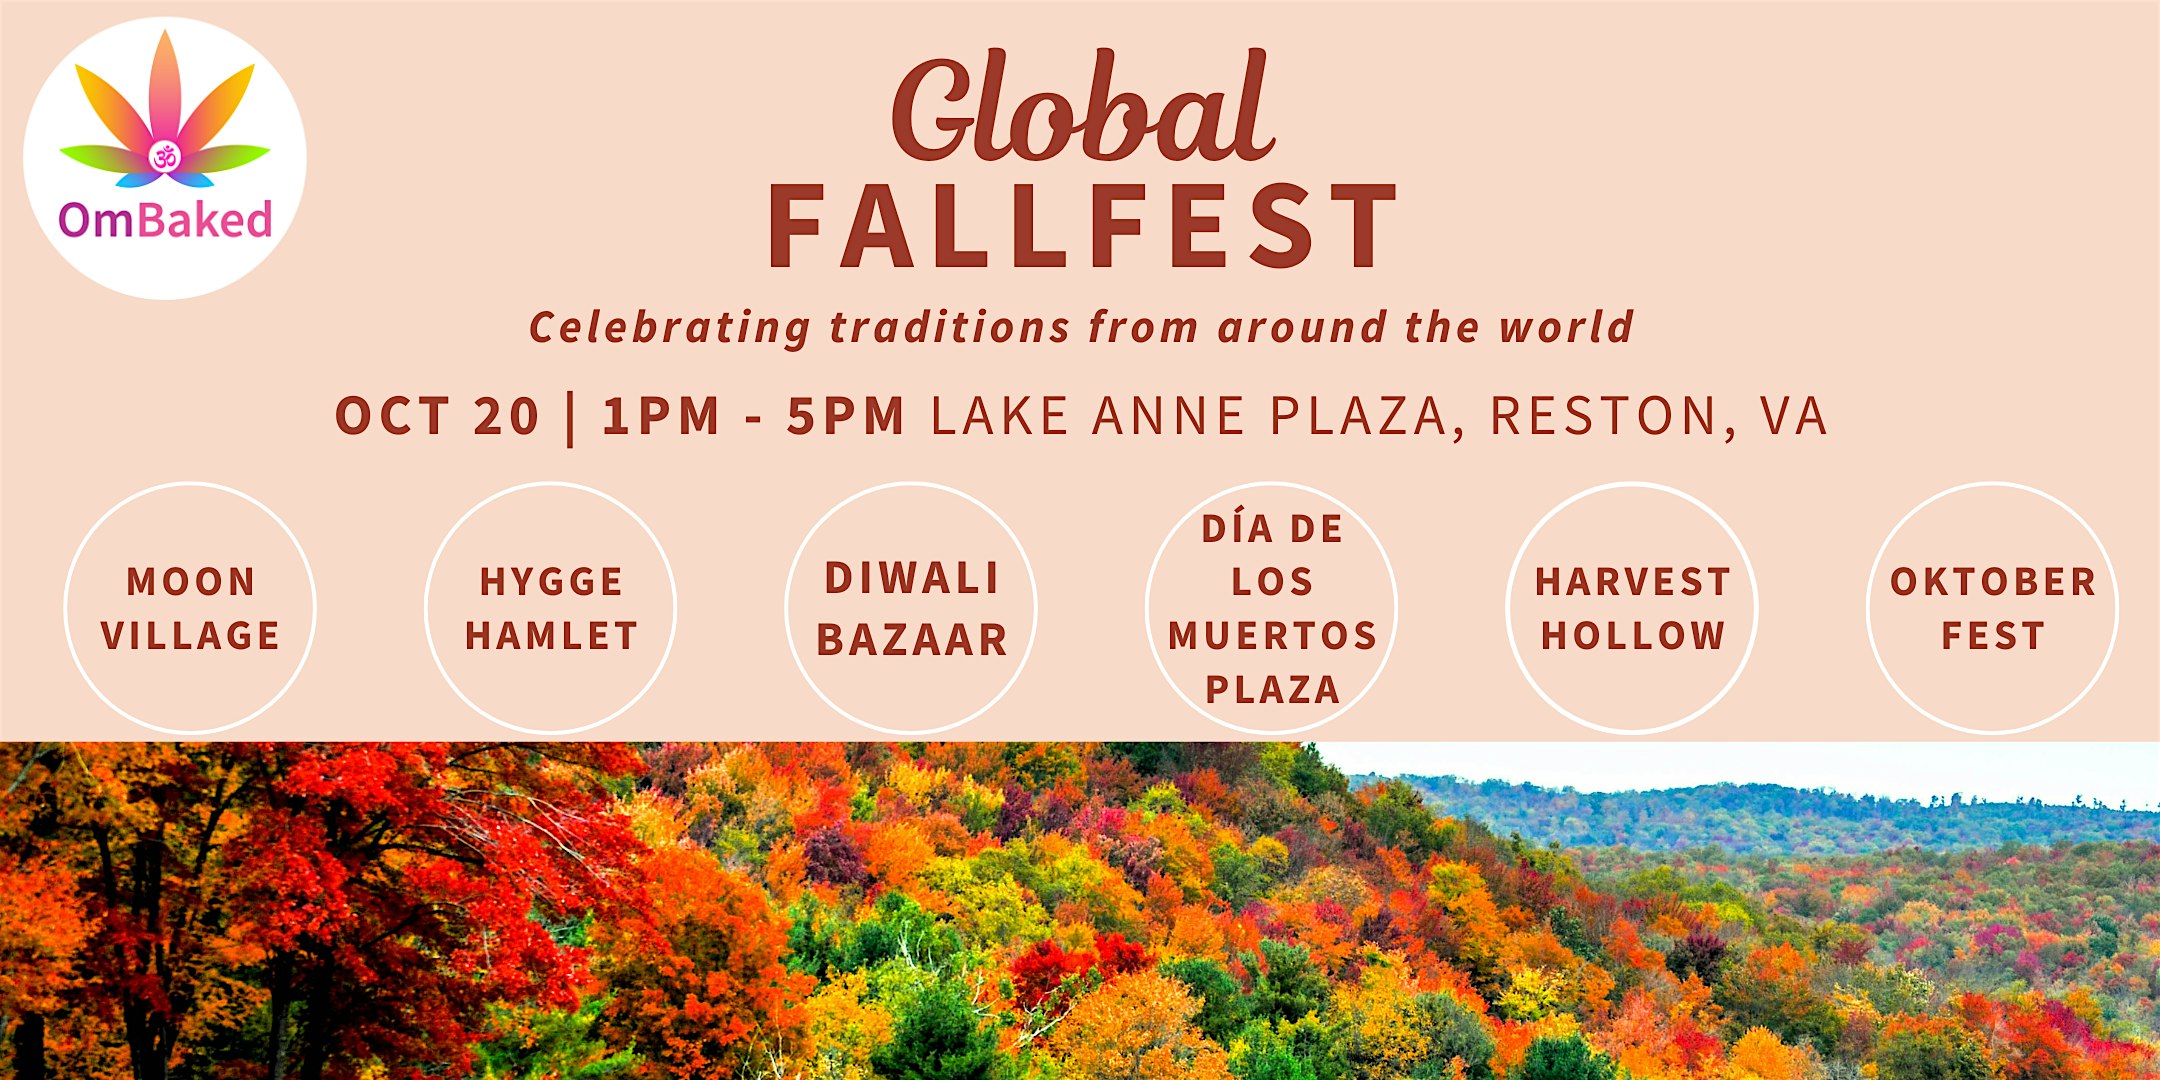 Global FallFest, sponsored by OmBaked